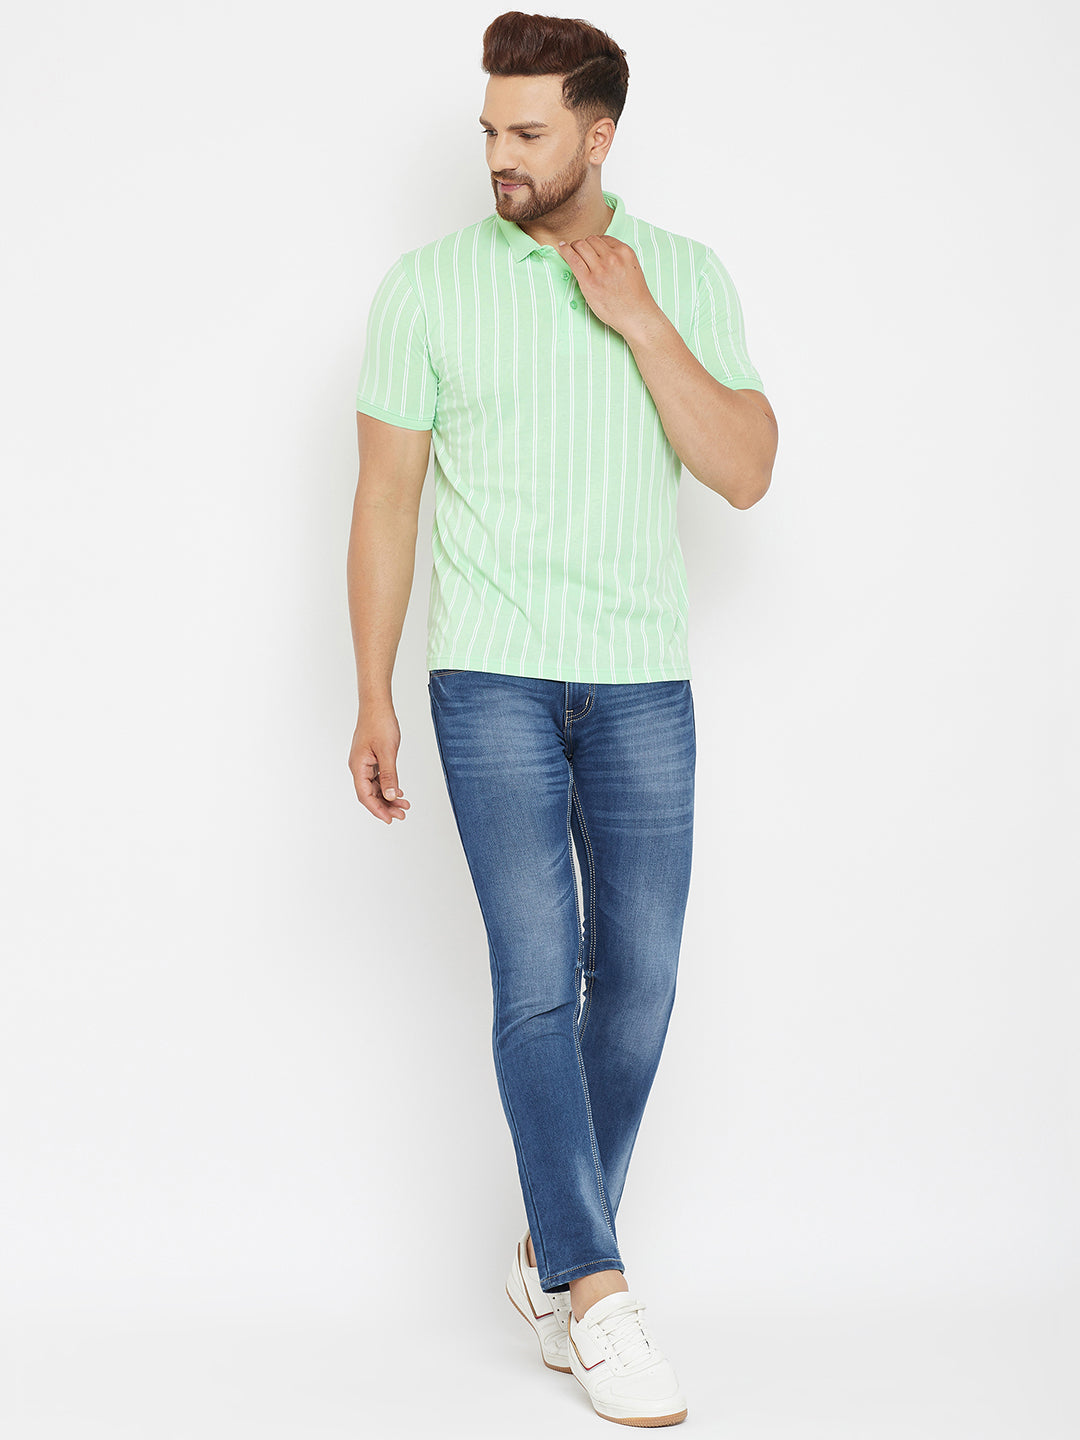 Green Striped Polo T-Shirt - Men T-Shirts